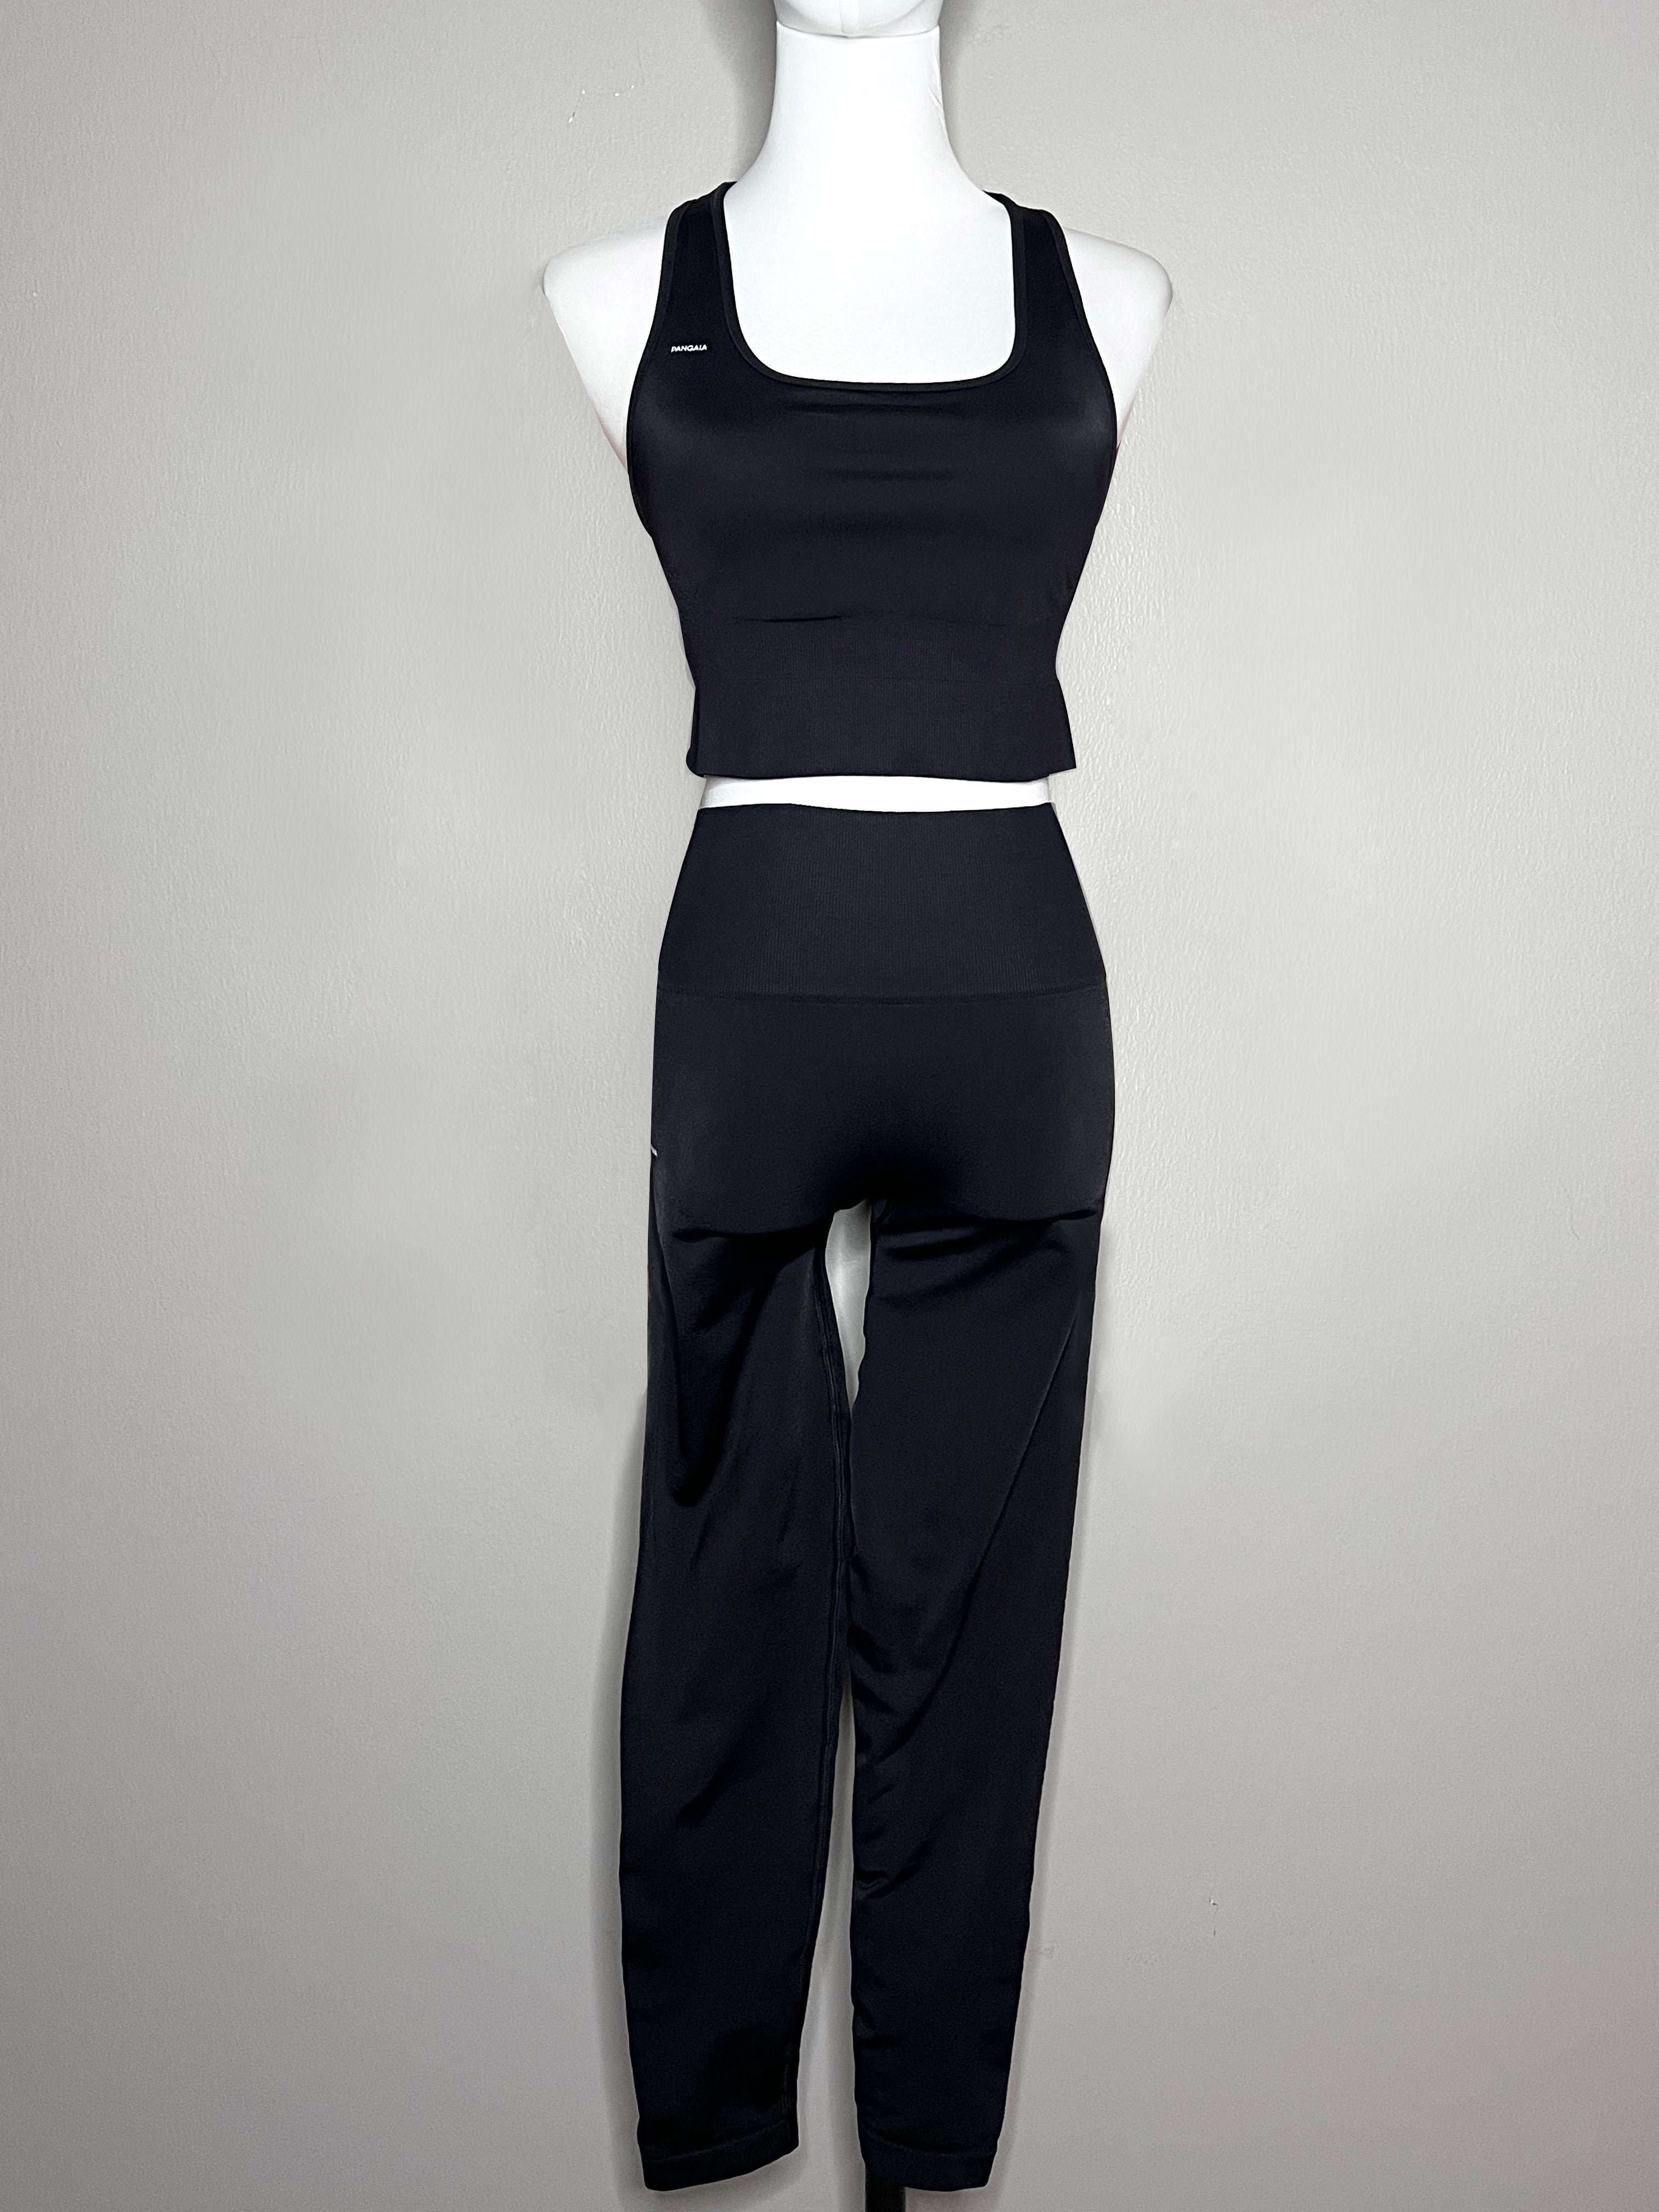 Black active wear set  motion leggings & motion sports bra - Pangaia